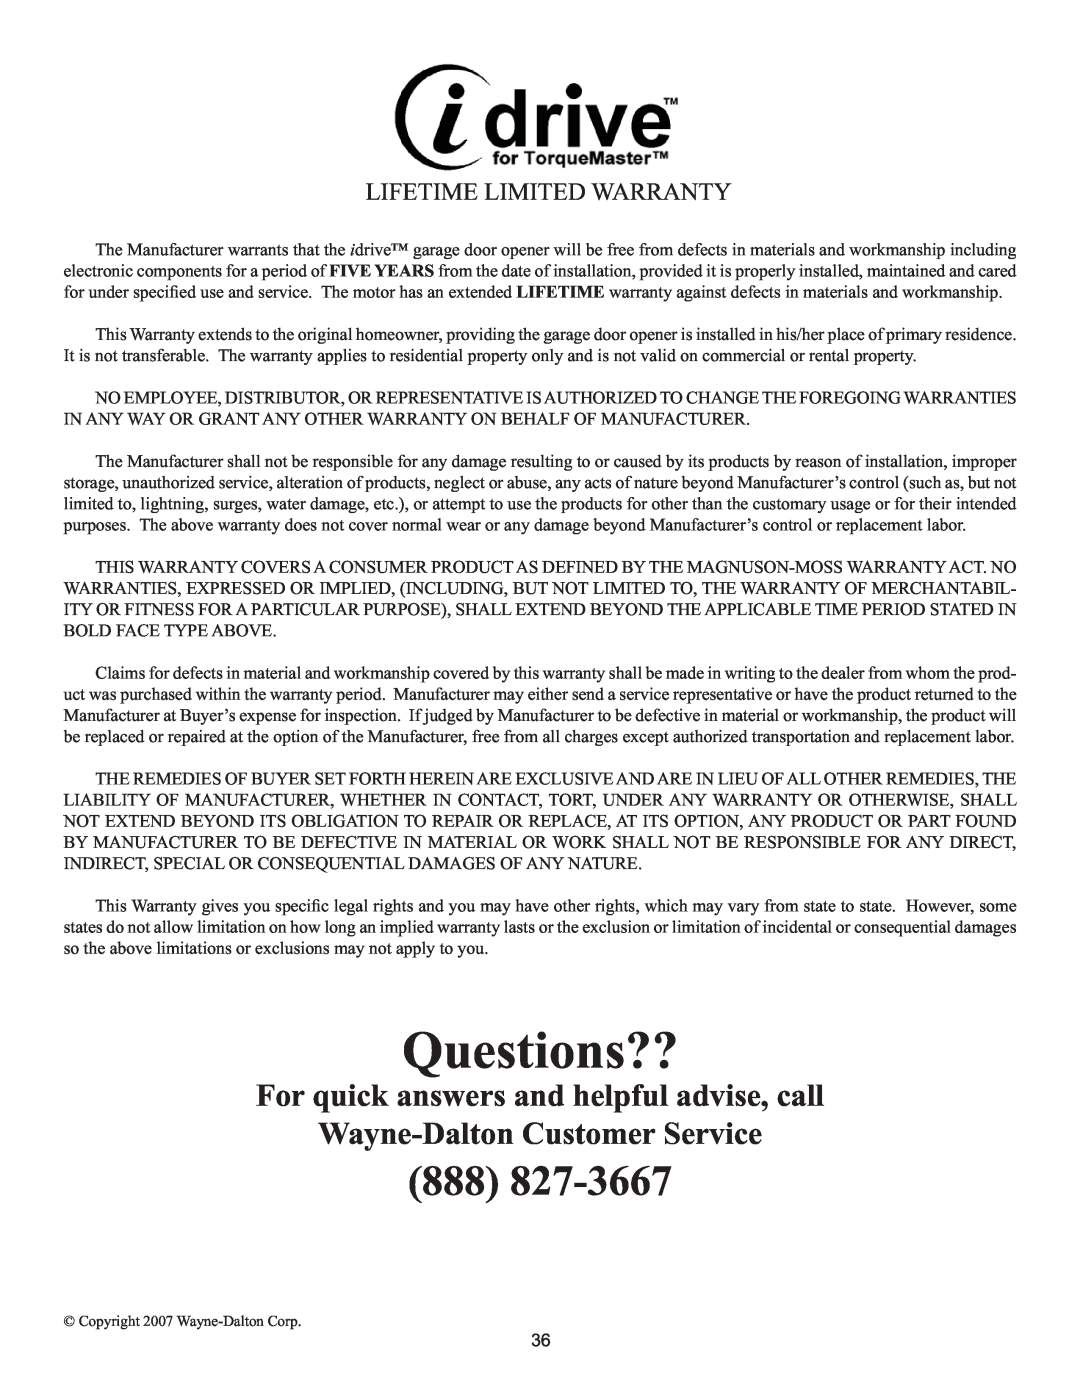 Wayne-Dalton 3982 Questions??, For quick answers and helpful advise, call, Wayne-DaltonCustomer Service 